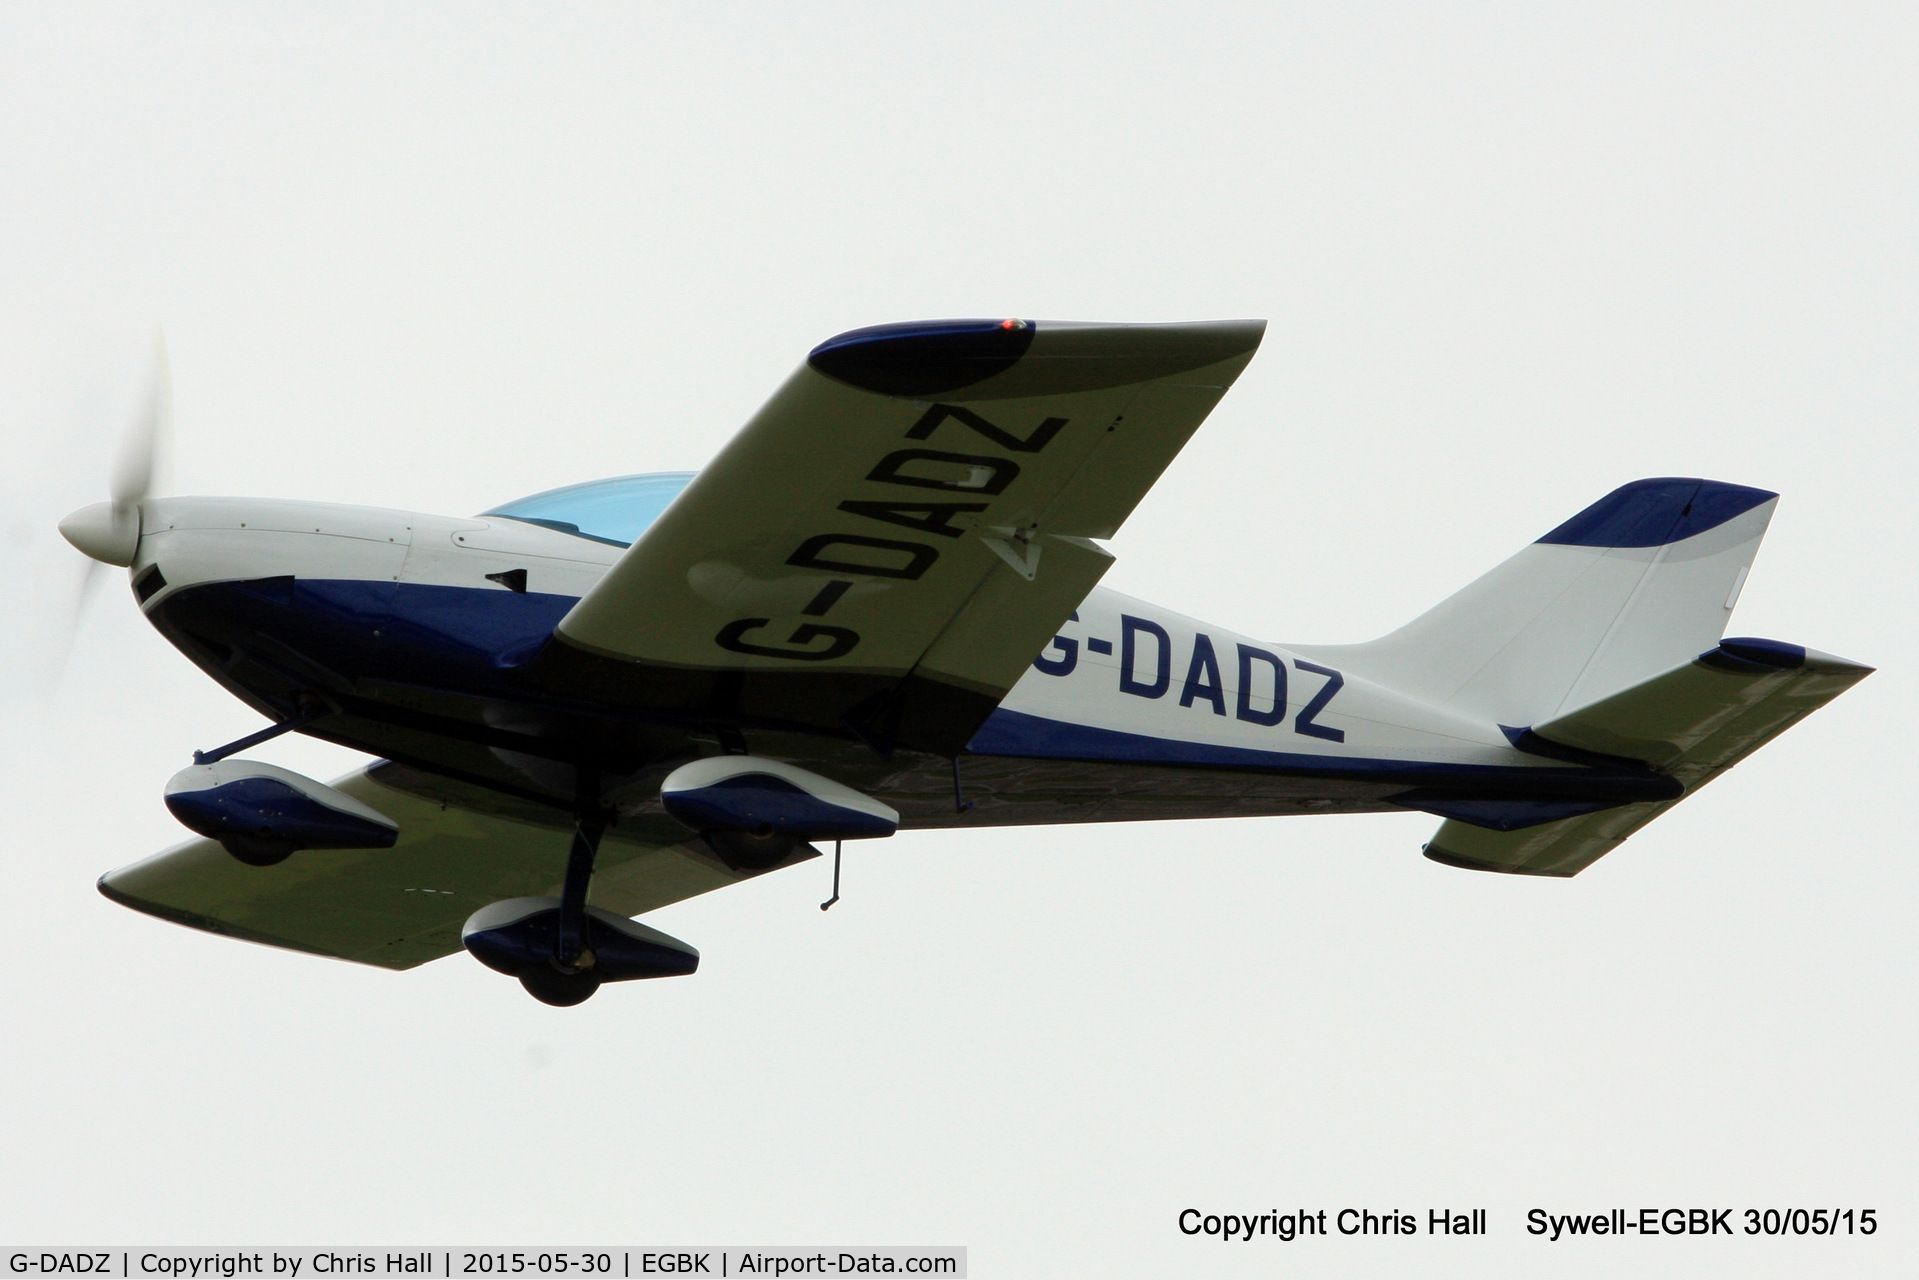 G-DADZ, 2009 CZAW Sportcruiser C/N LAA 338-14792, at Aeroexpo 2015